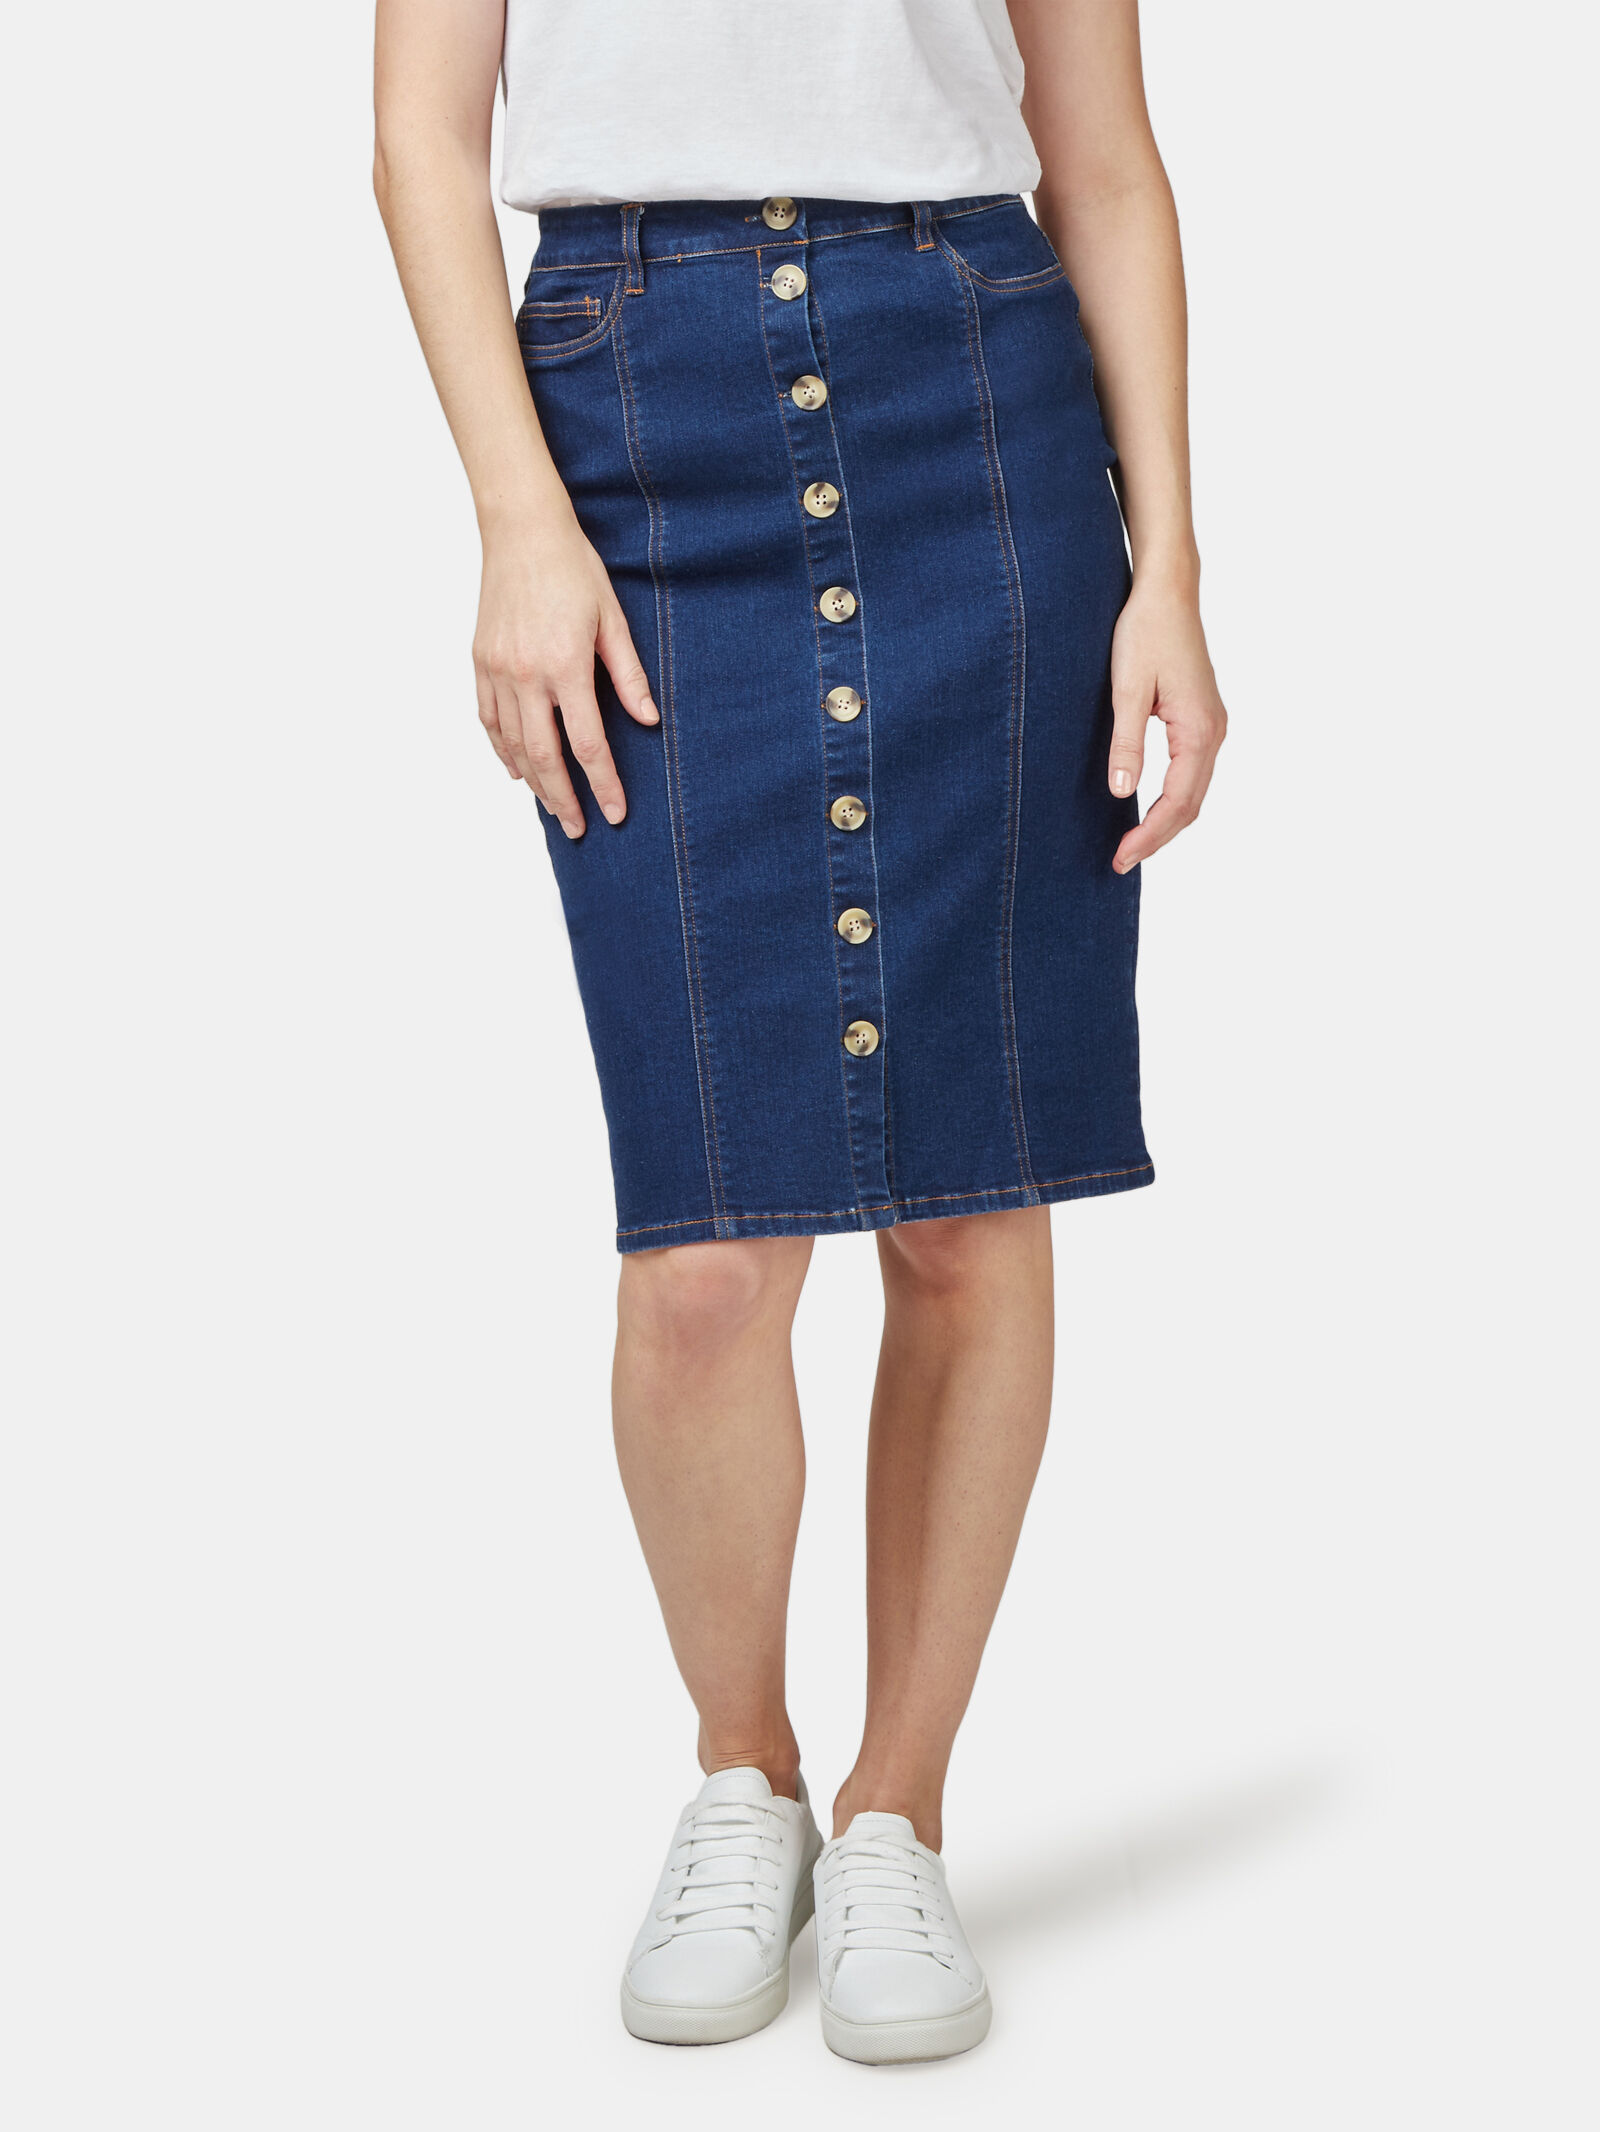 Jeans West Nina Luxe Lounge Navy Blue Denim Skirt... - Depop